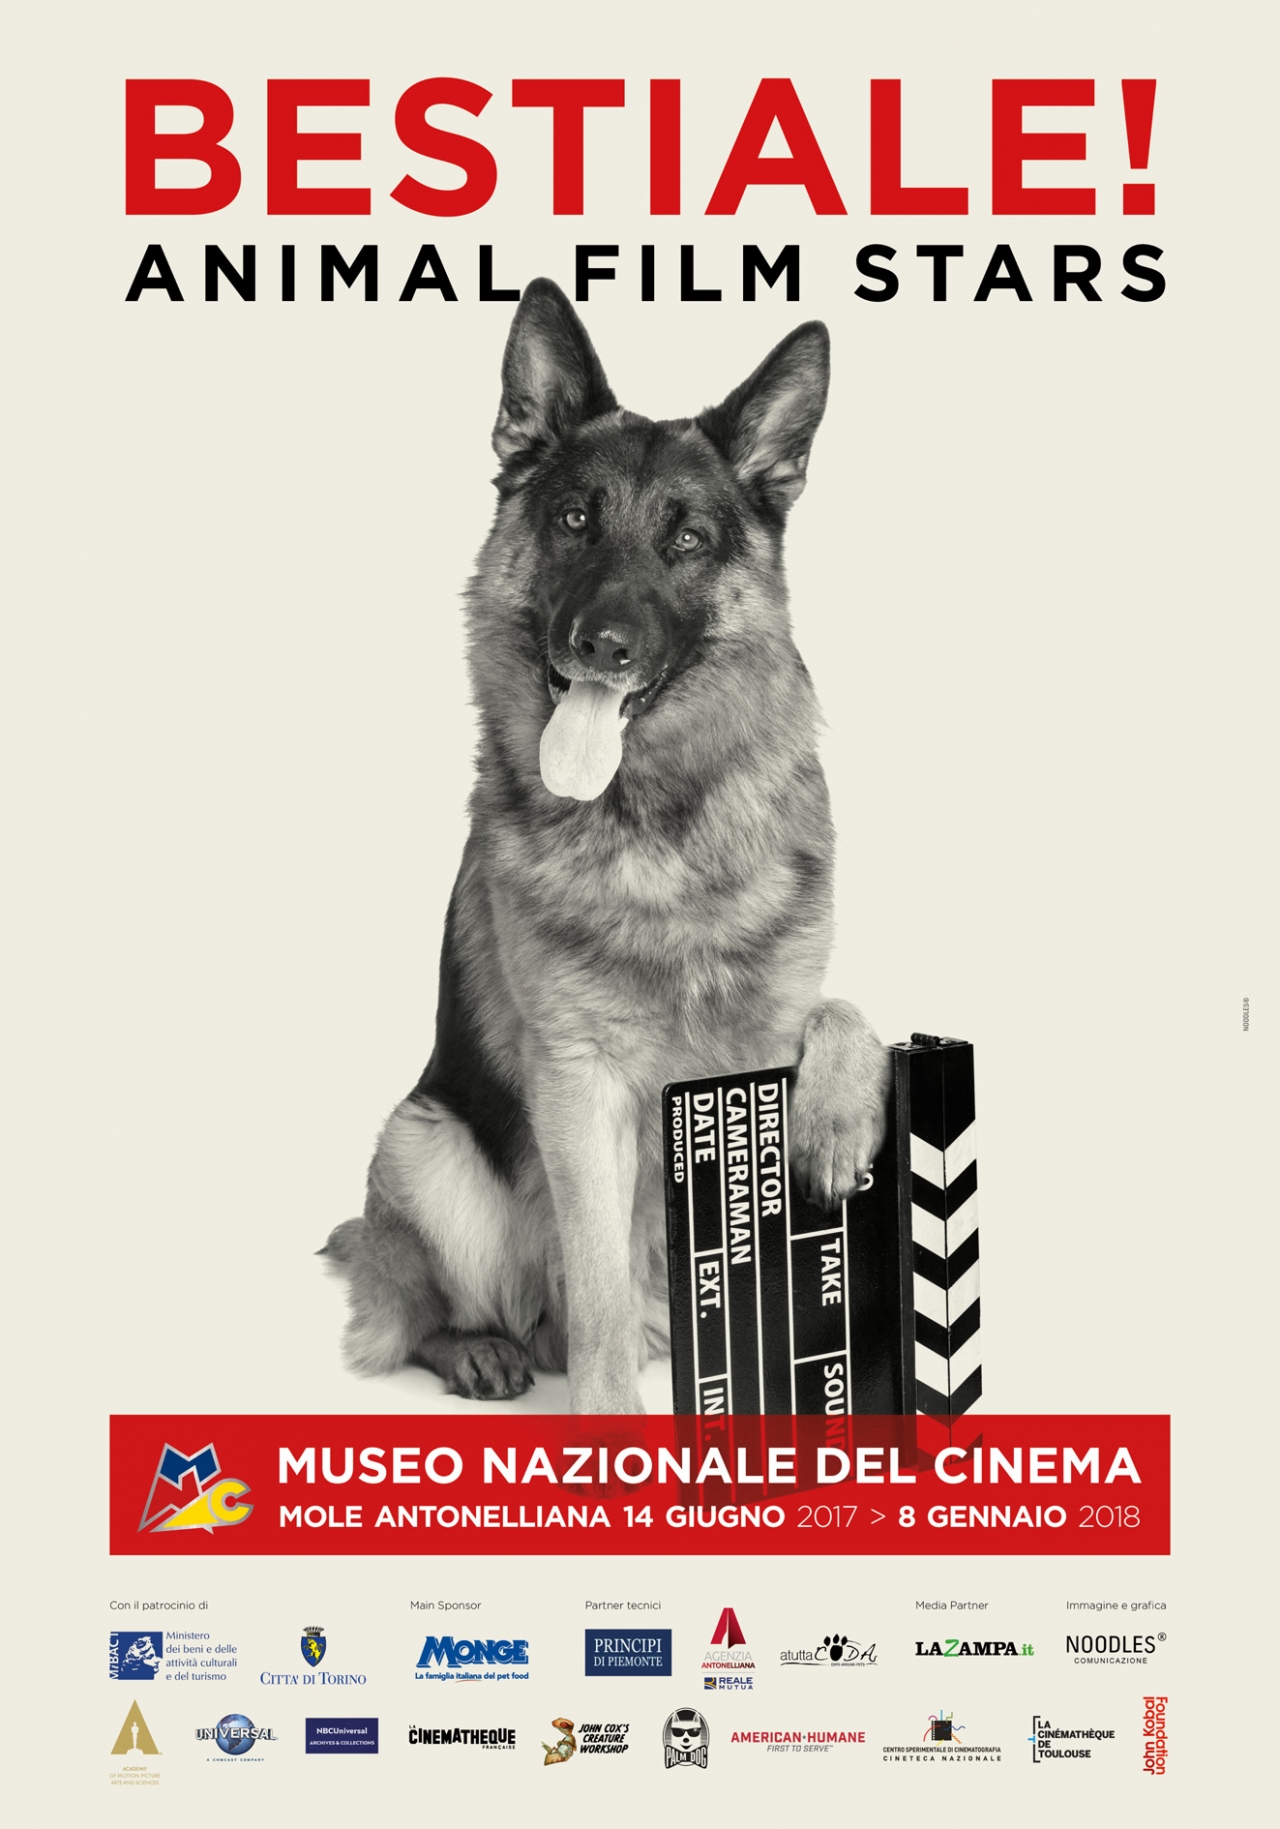 BESTIALE! Animal Film Stars